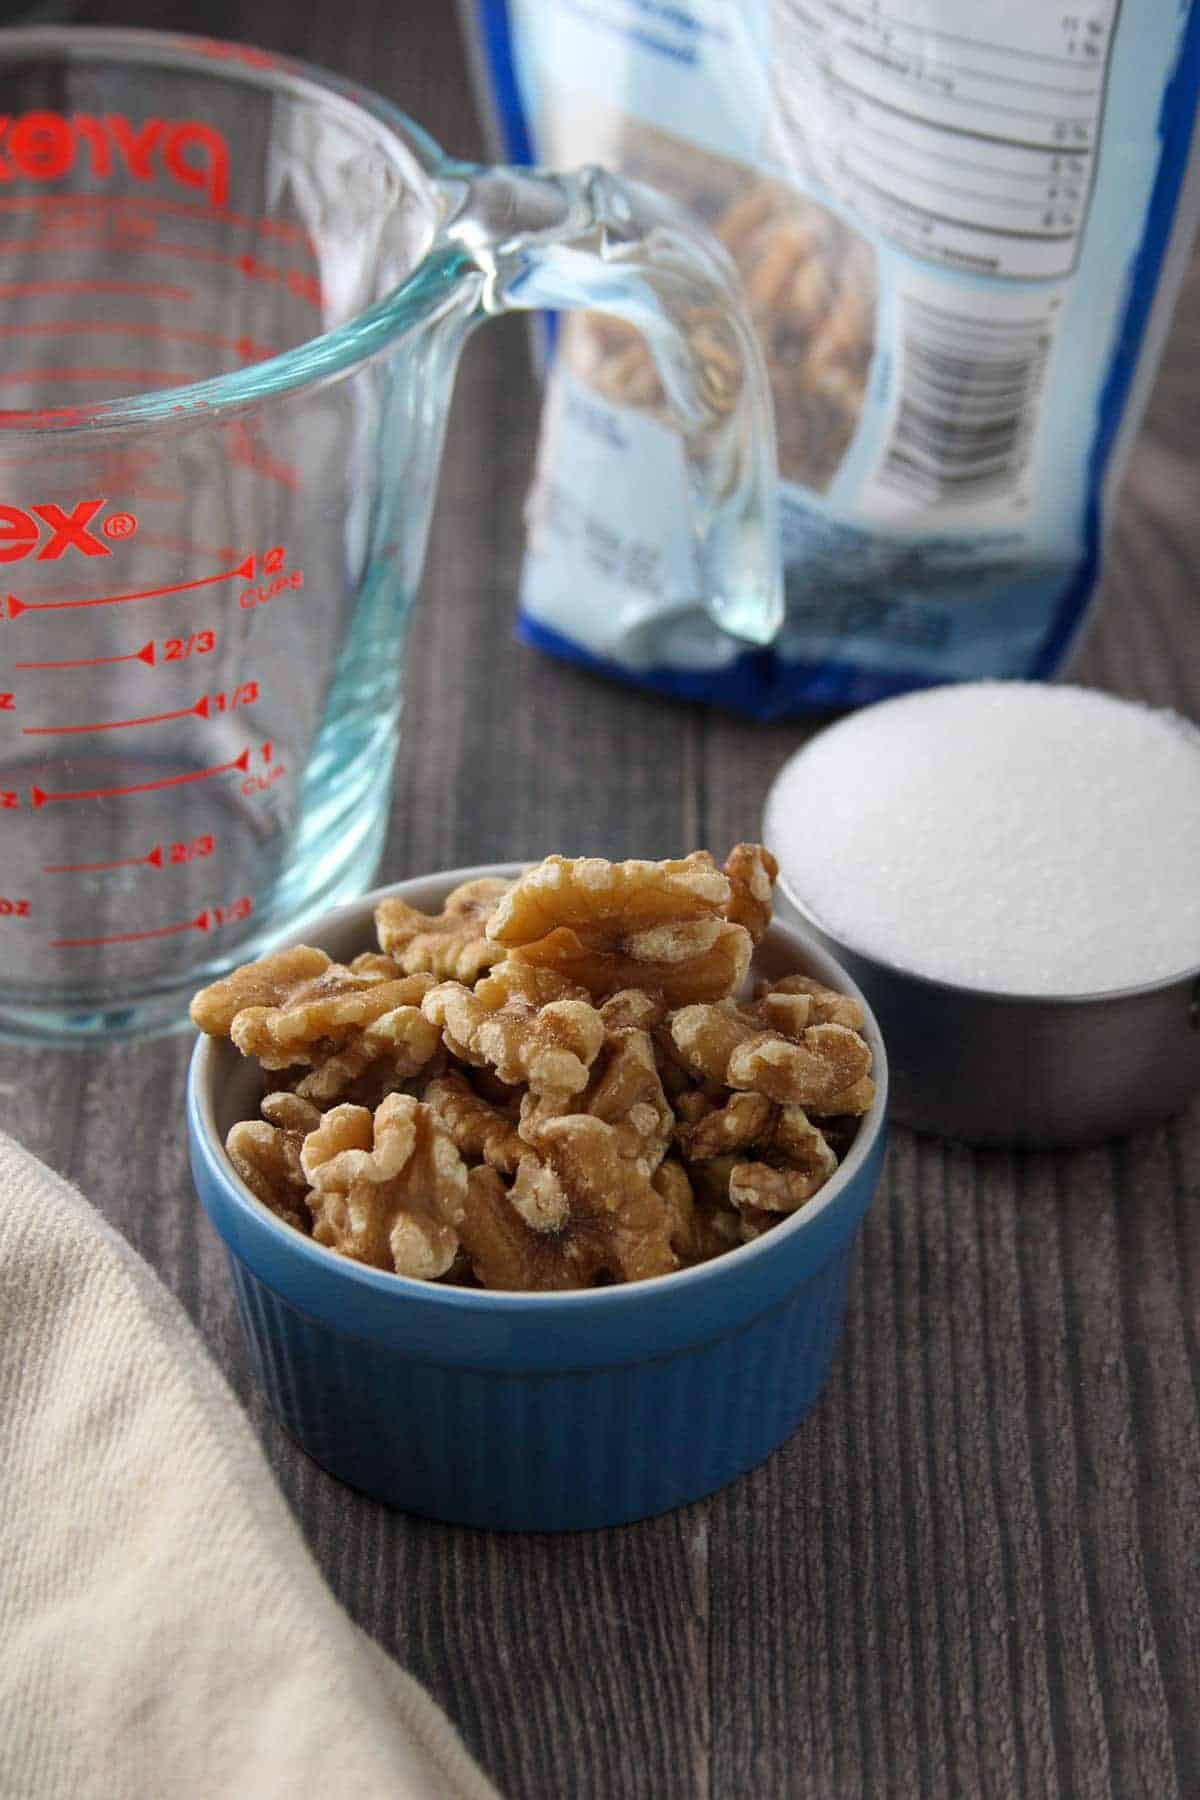 walnuts in a blue bowl, measurig cup, and sugar